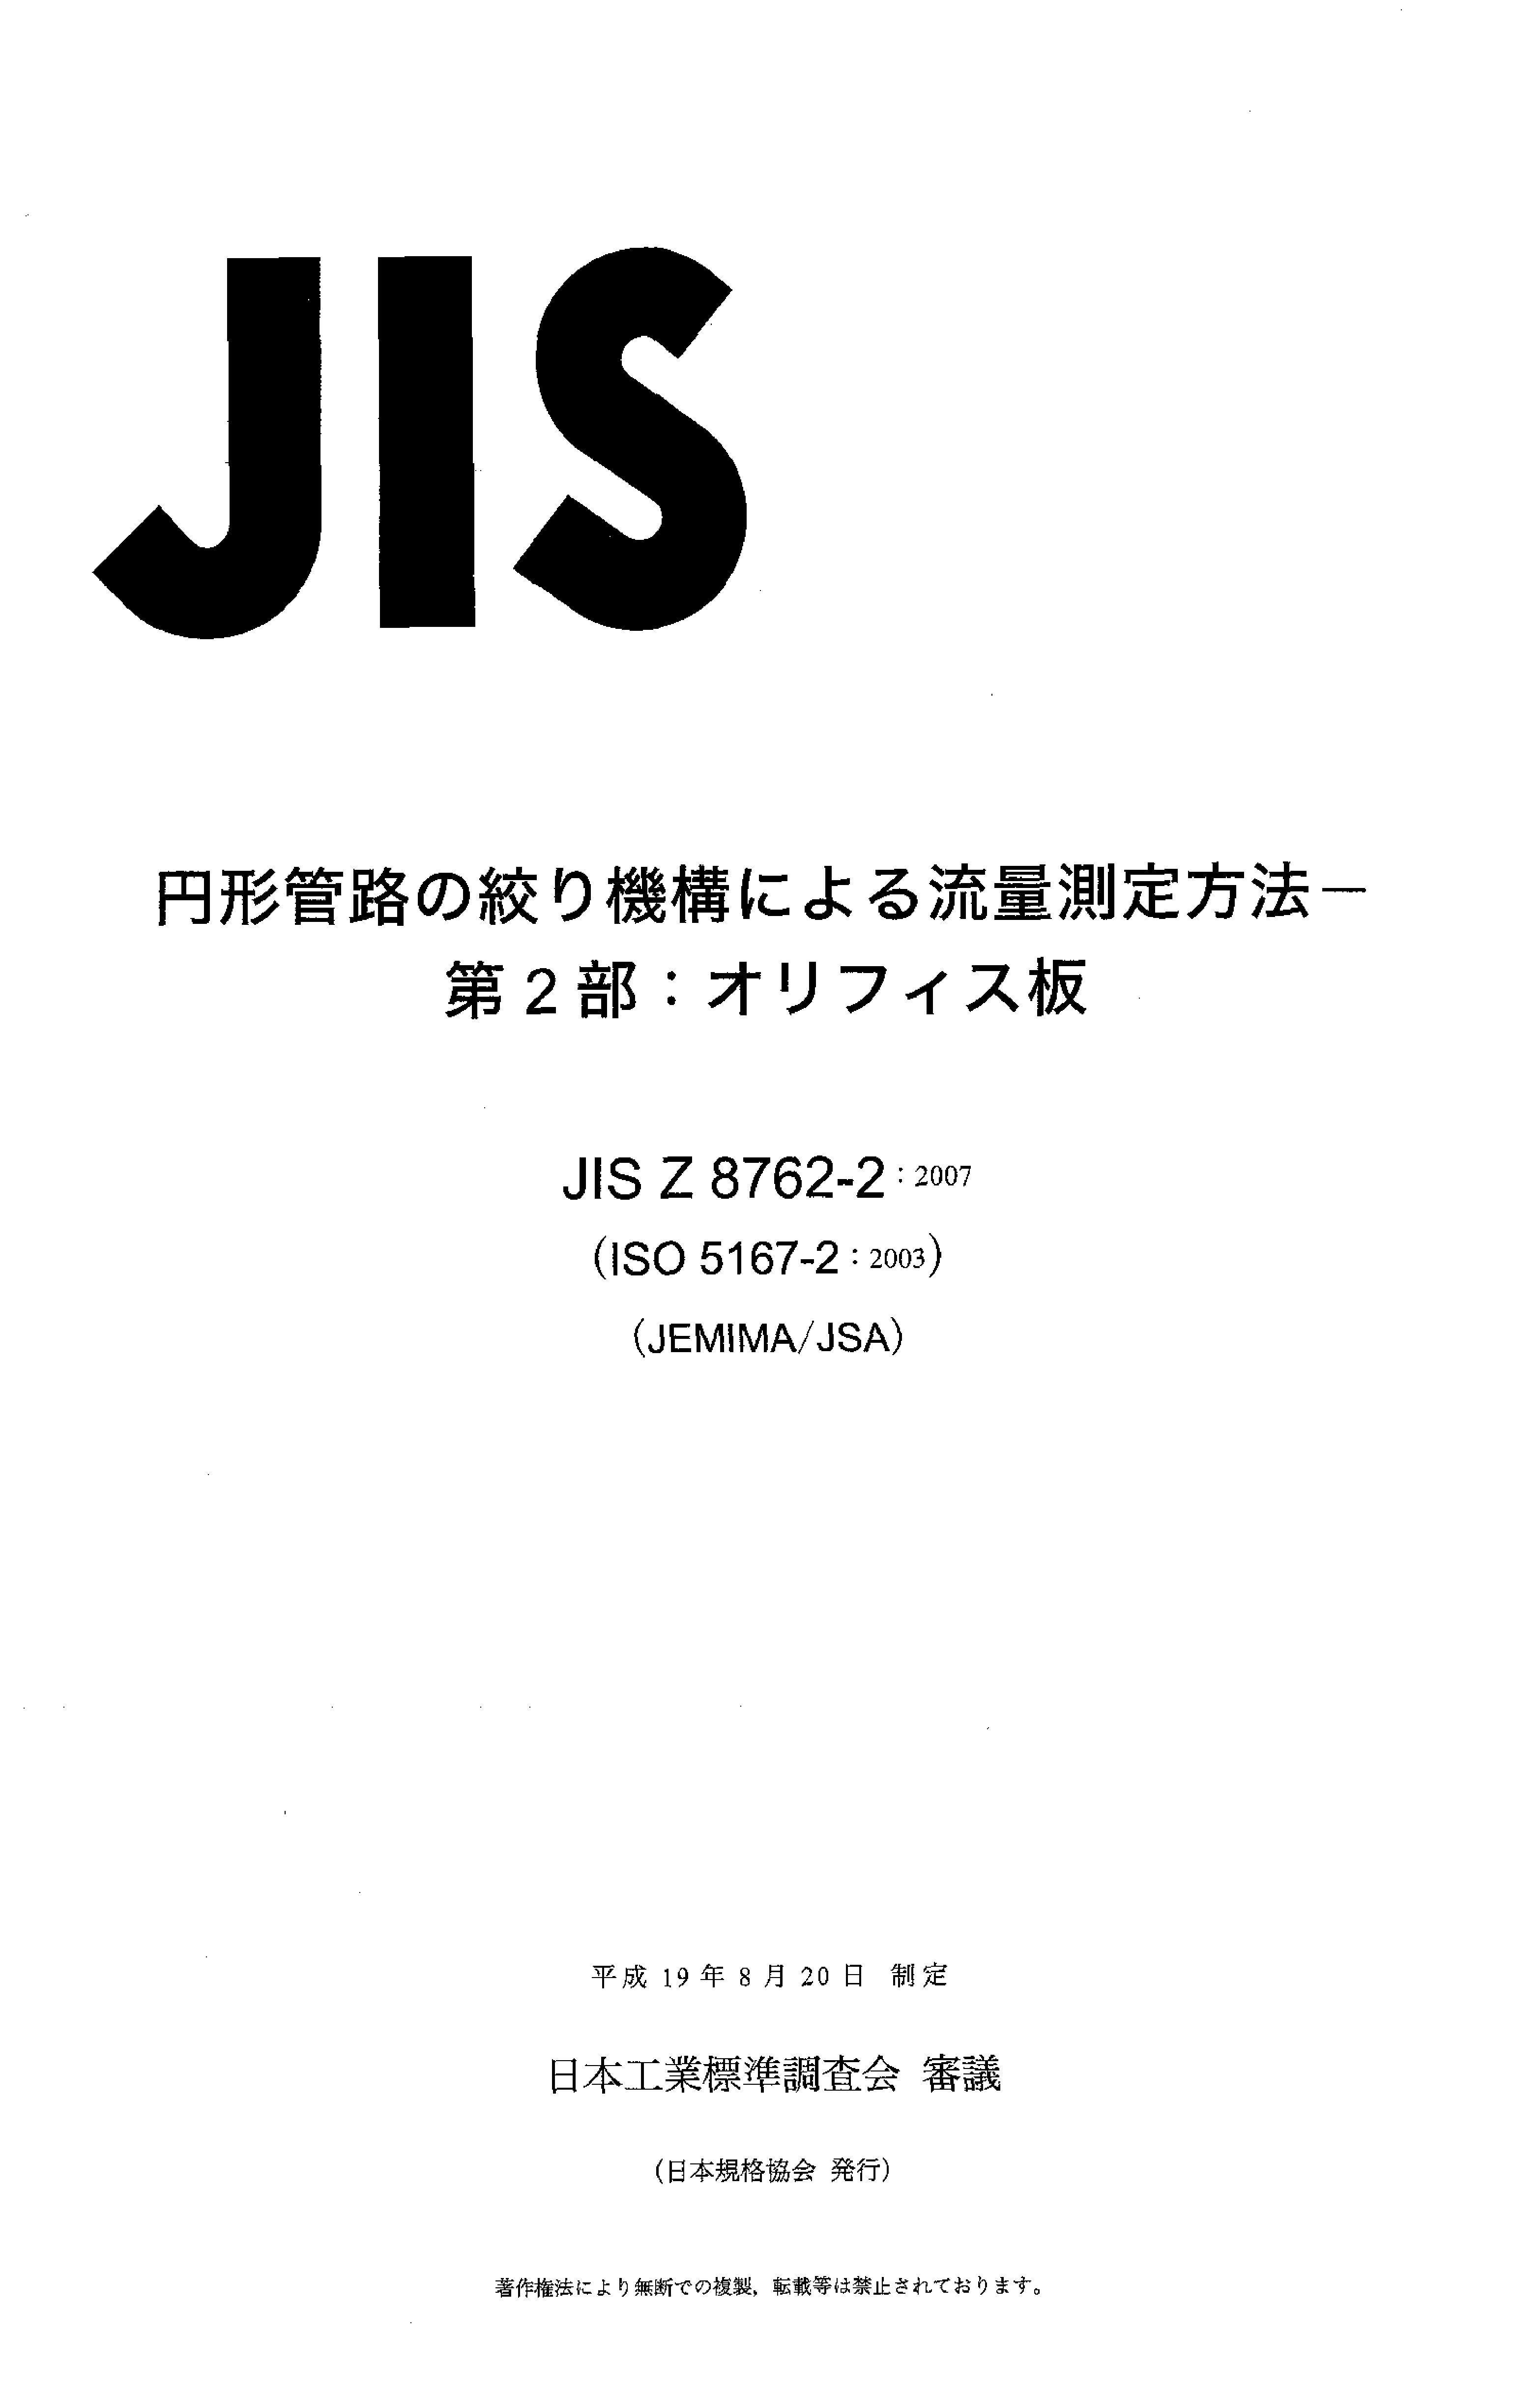 JIS Z 8762-2:2007封面图